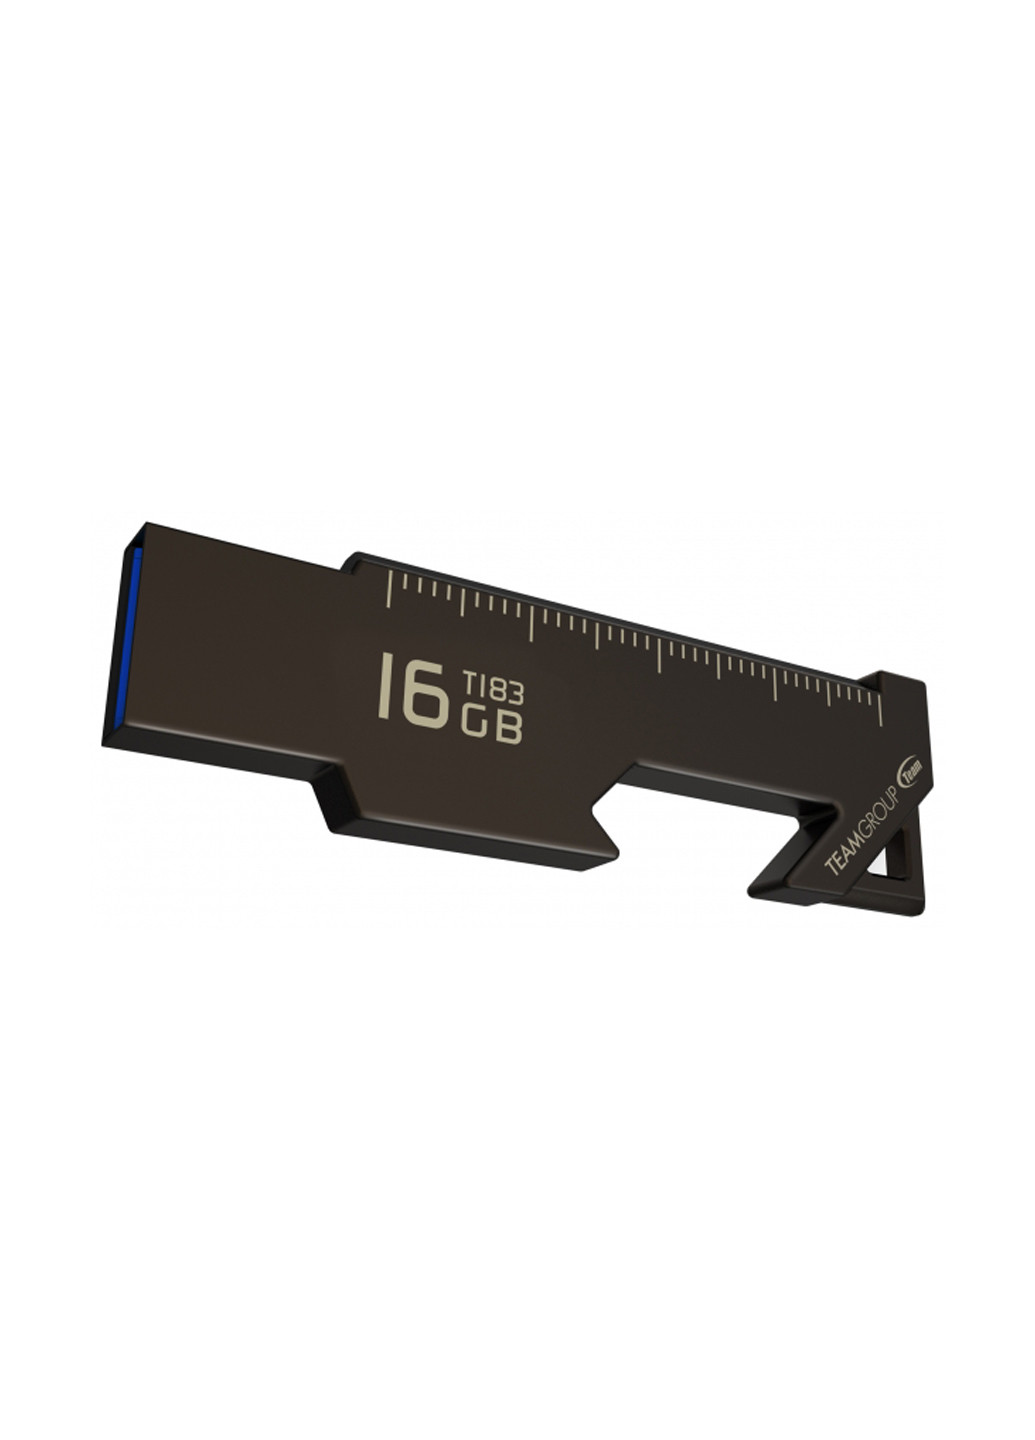 Флеш память USB T183 16GB Black (TT183316GF01) Team флеш память usb team t183 16gb black (tt183316gf01) (134201759)